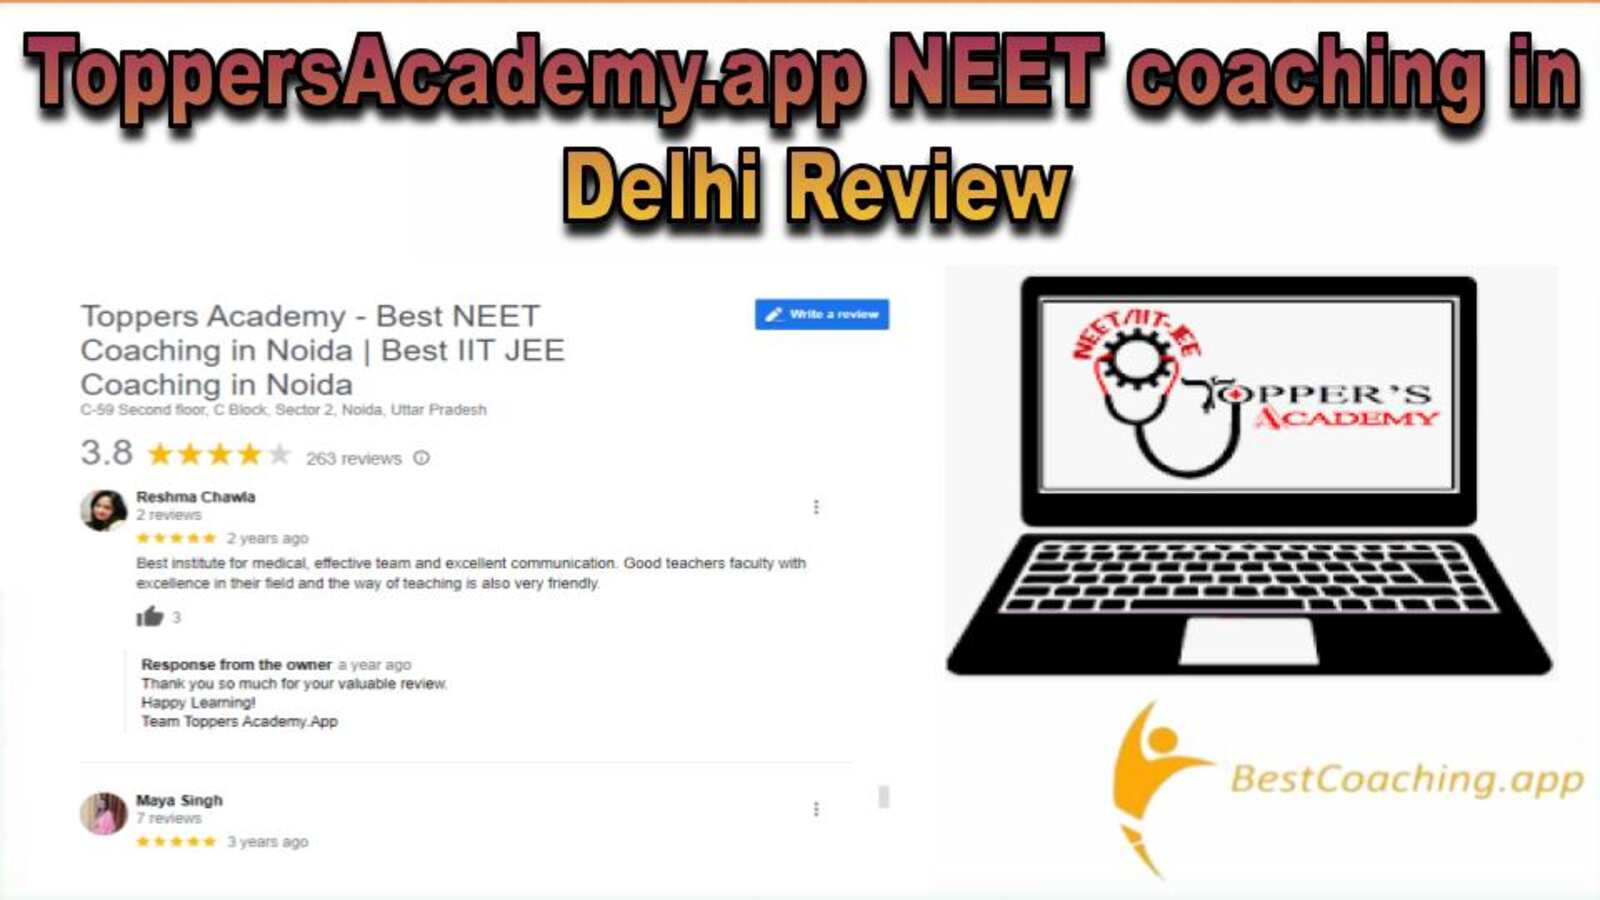 ToppersAcademy.app NEET coaching Delhi Review